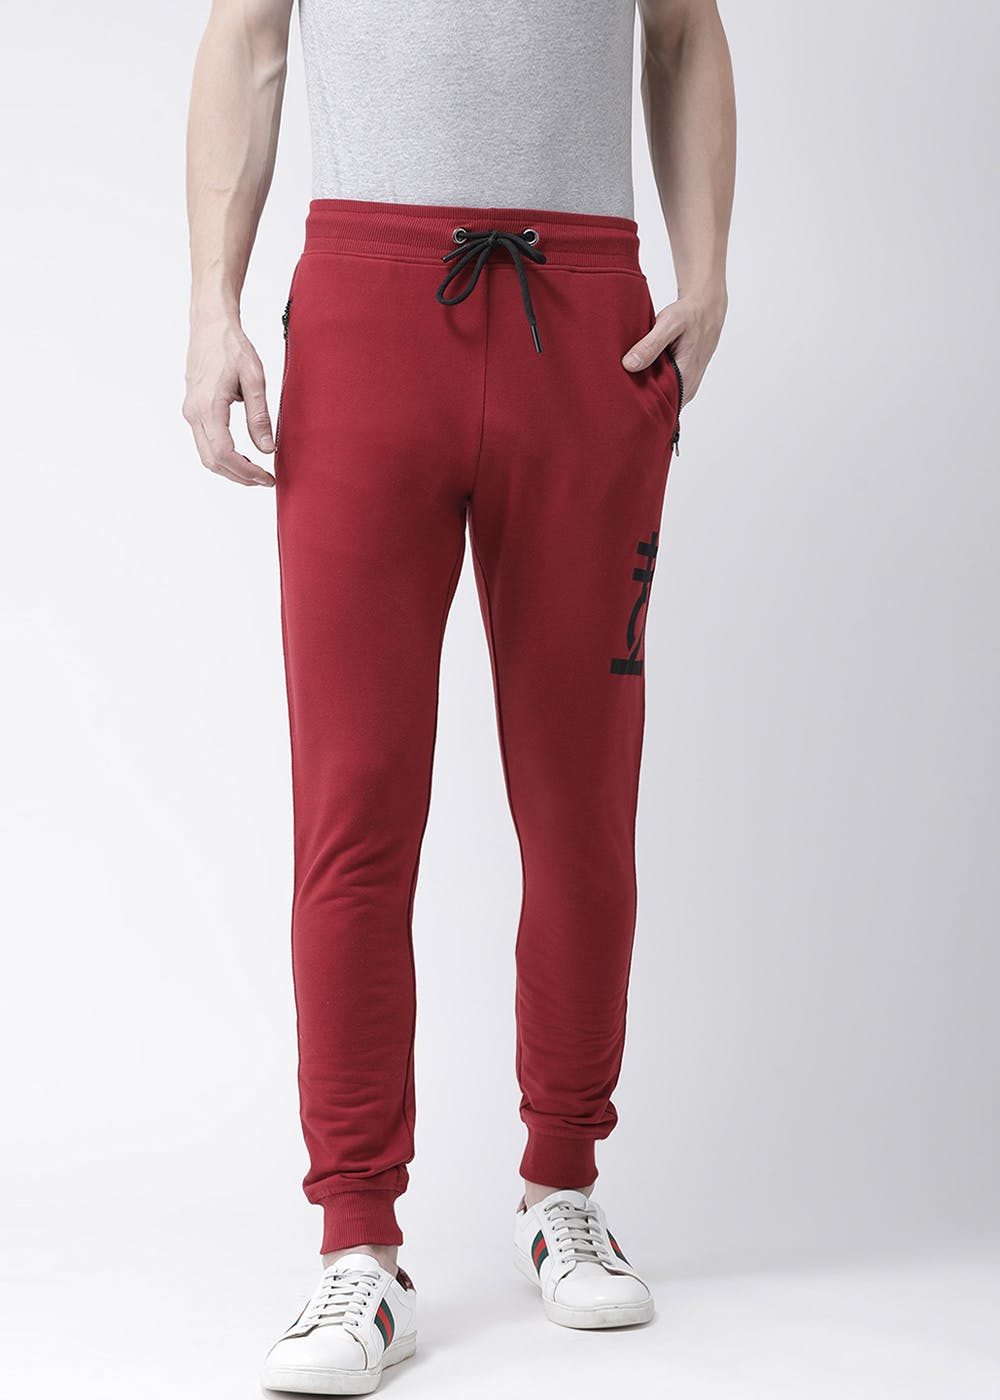 Shop For Men's Bottomwear - Jeans, Pyjamas, And Shorts Online | LBB Shop